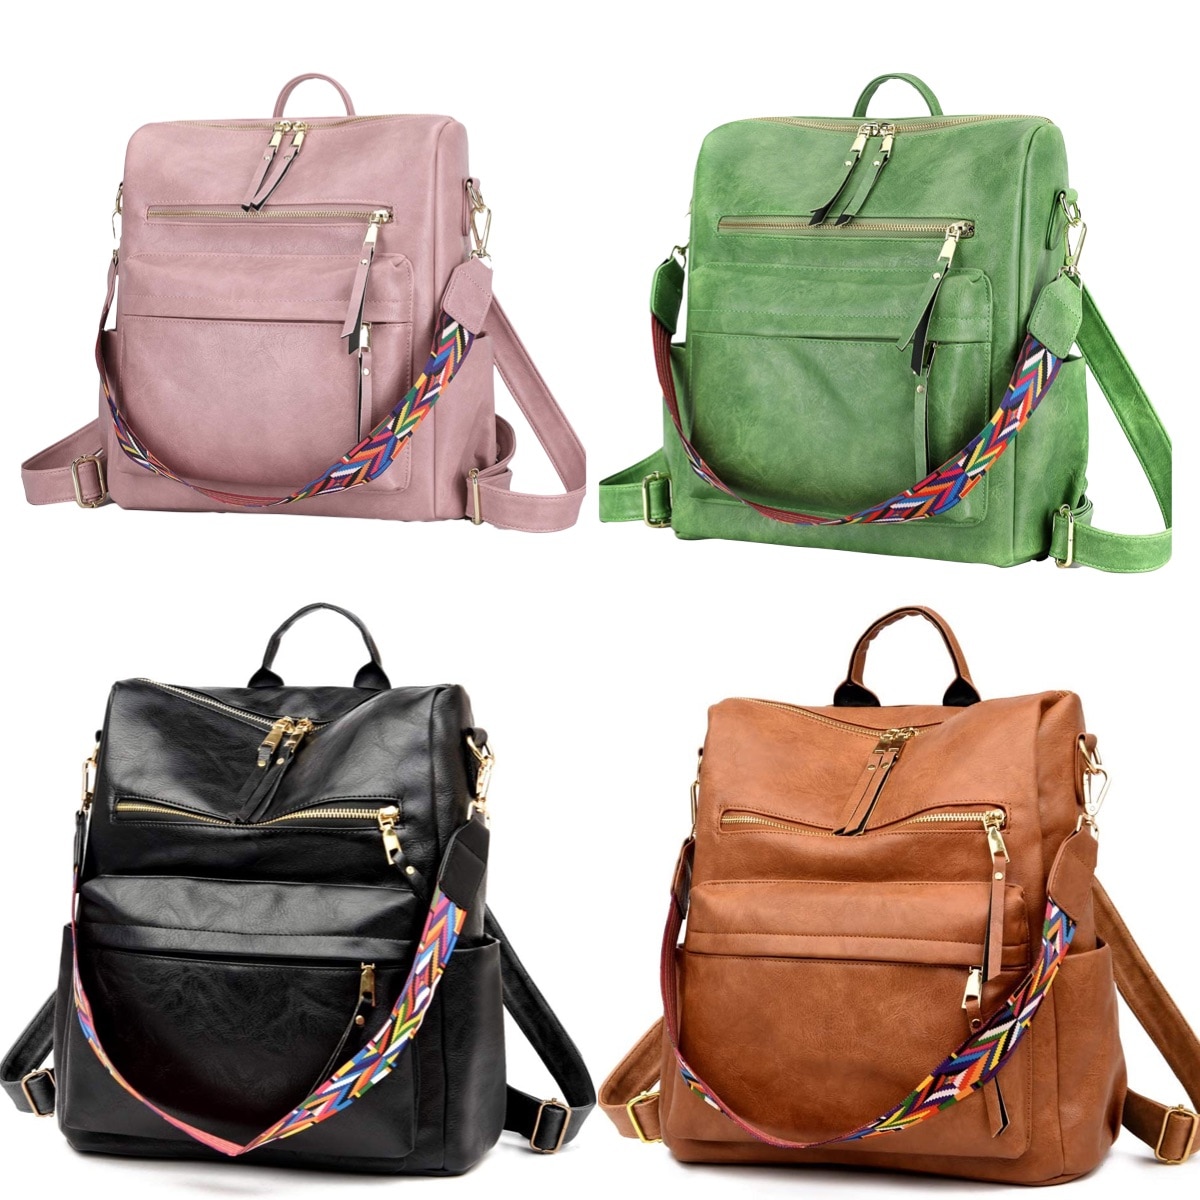 Buy Prezzo La Cafe Black Double Strap Handbag Purse Online at Low Prices in  India - Amazon.in